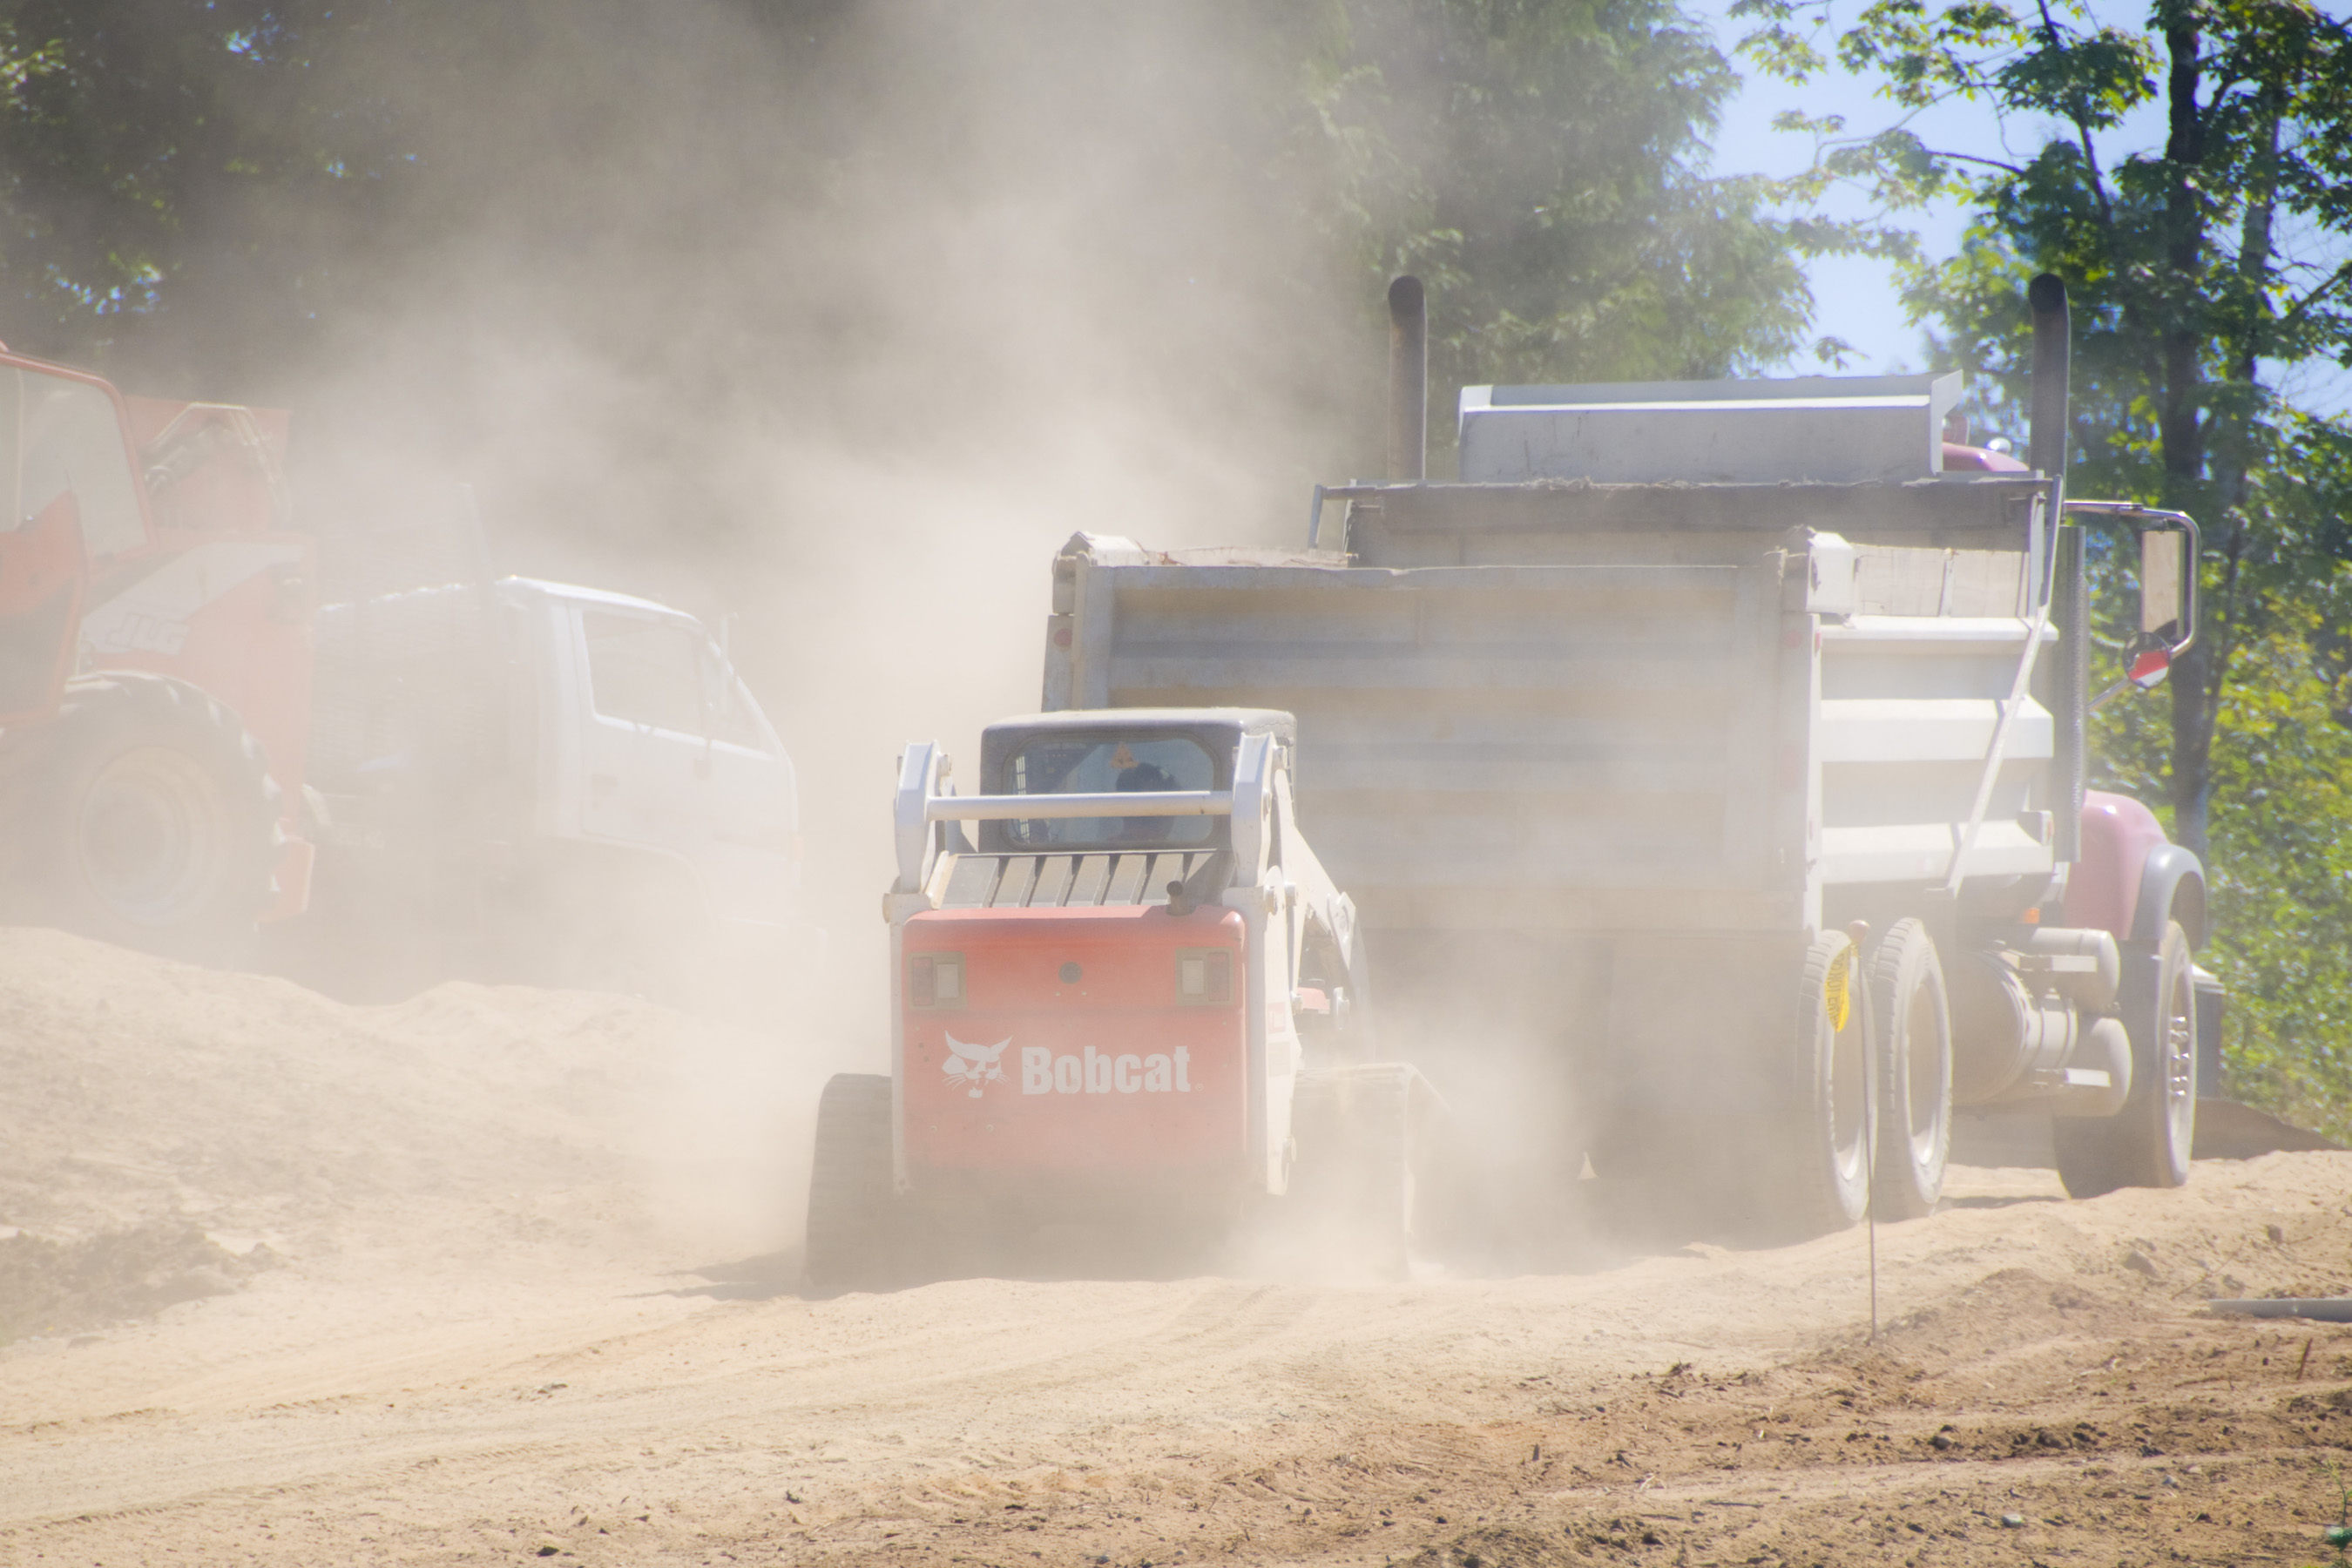 truck spreading liquid to suppress dust